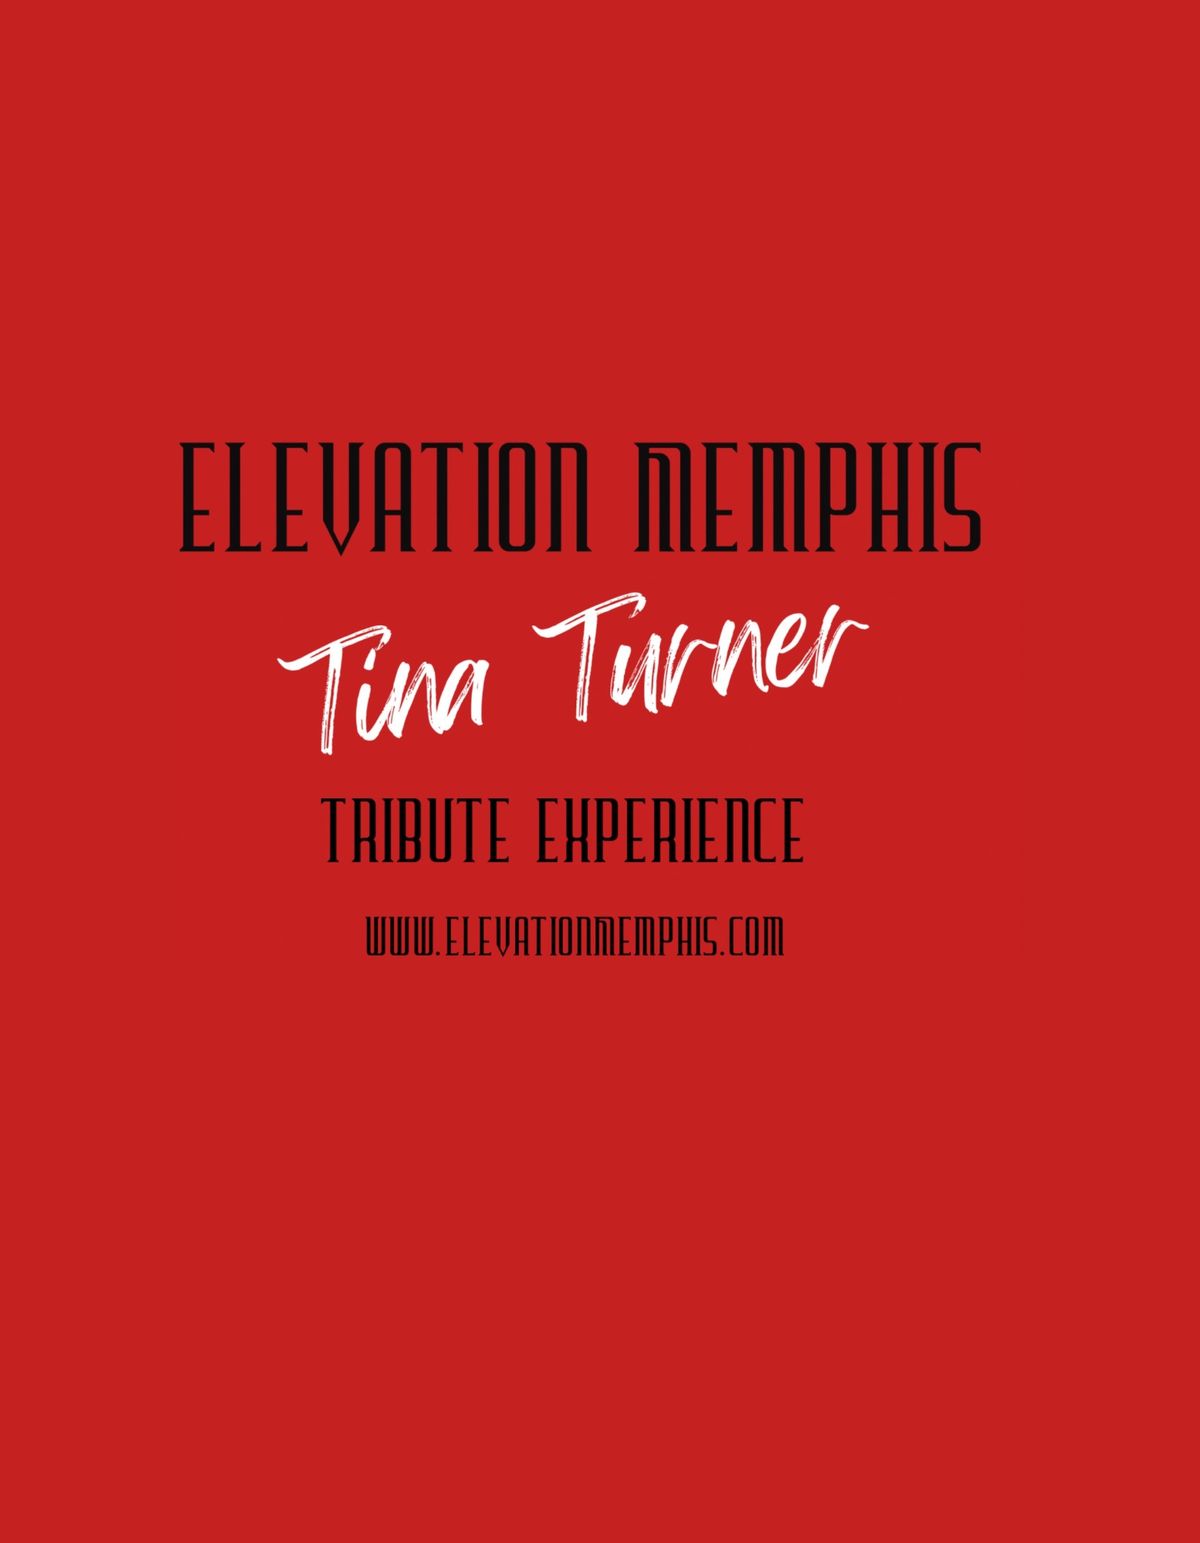 Lafayette\u2019s Music Room - Elevation Memphis: A Tina Turner Tribute Experience 